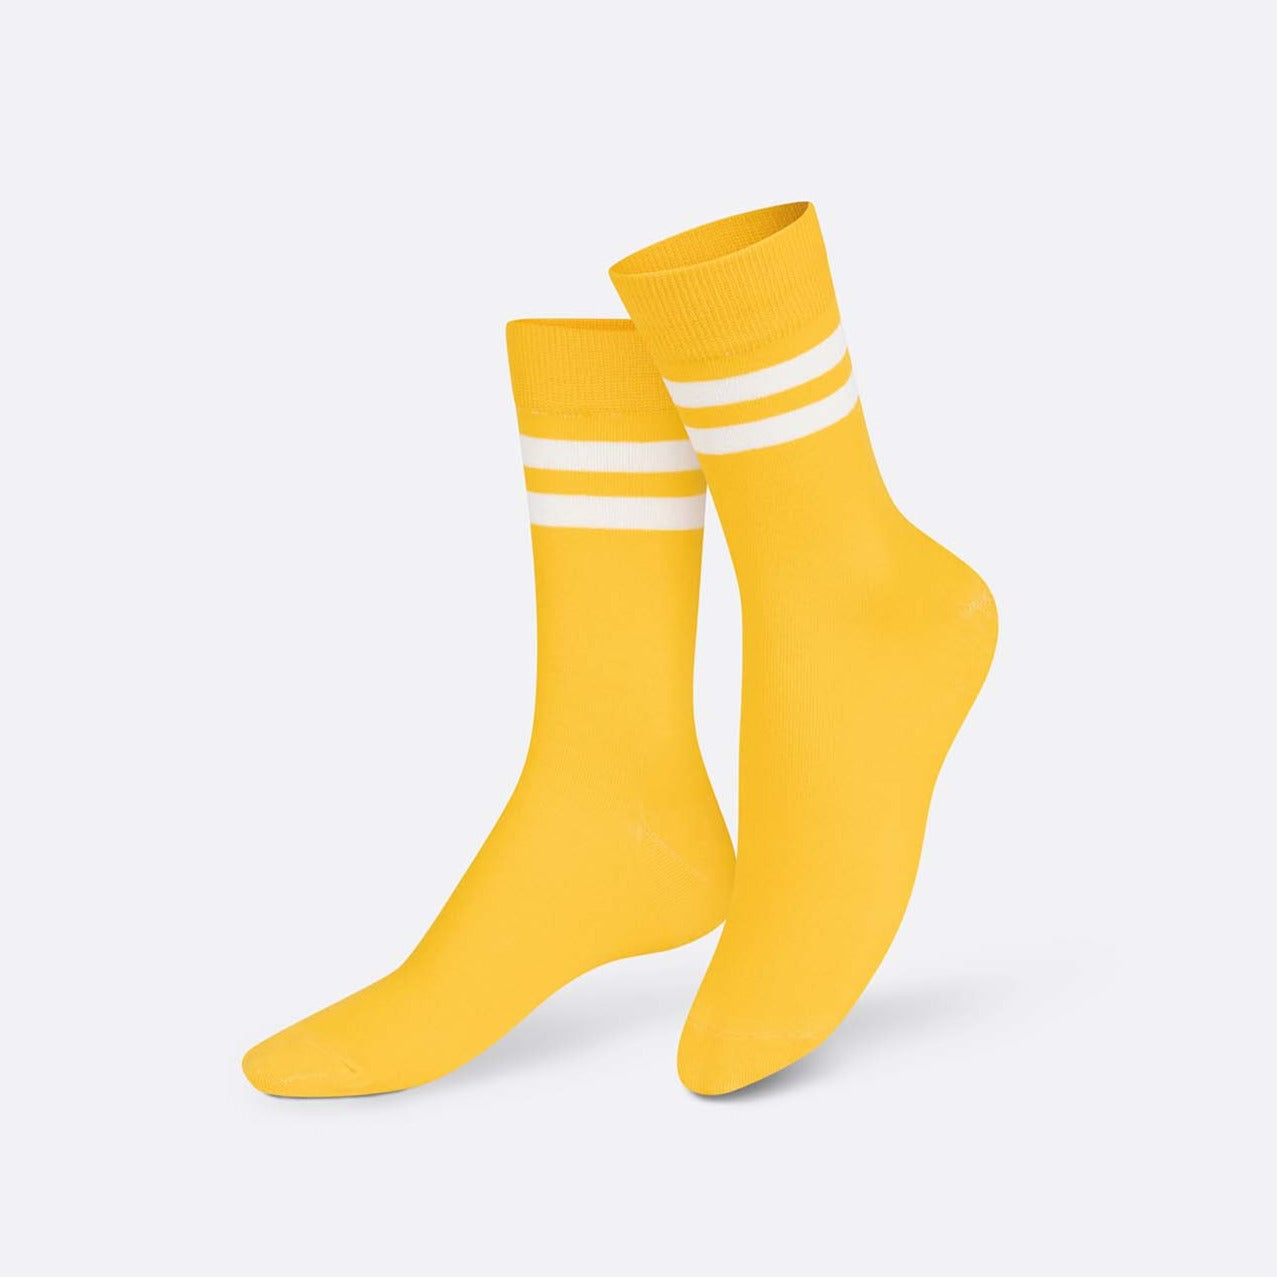 Eat My Socks: Soft Gruyère Socks